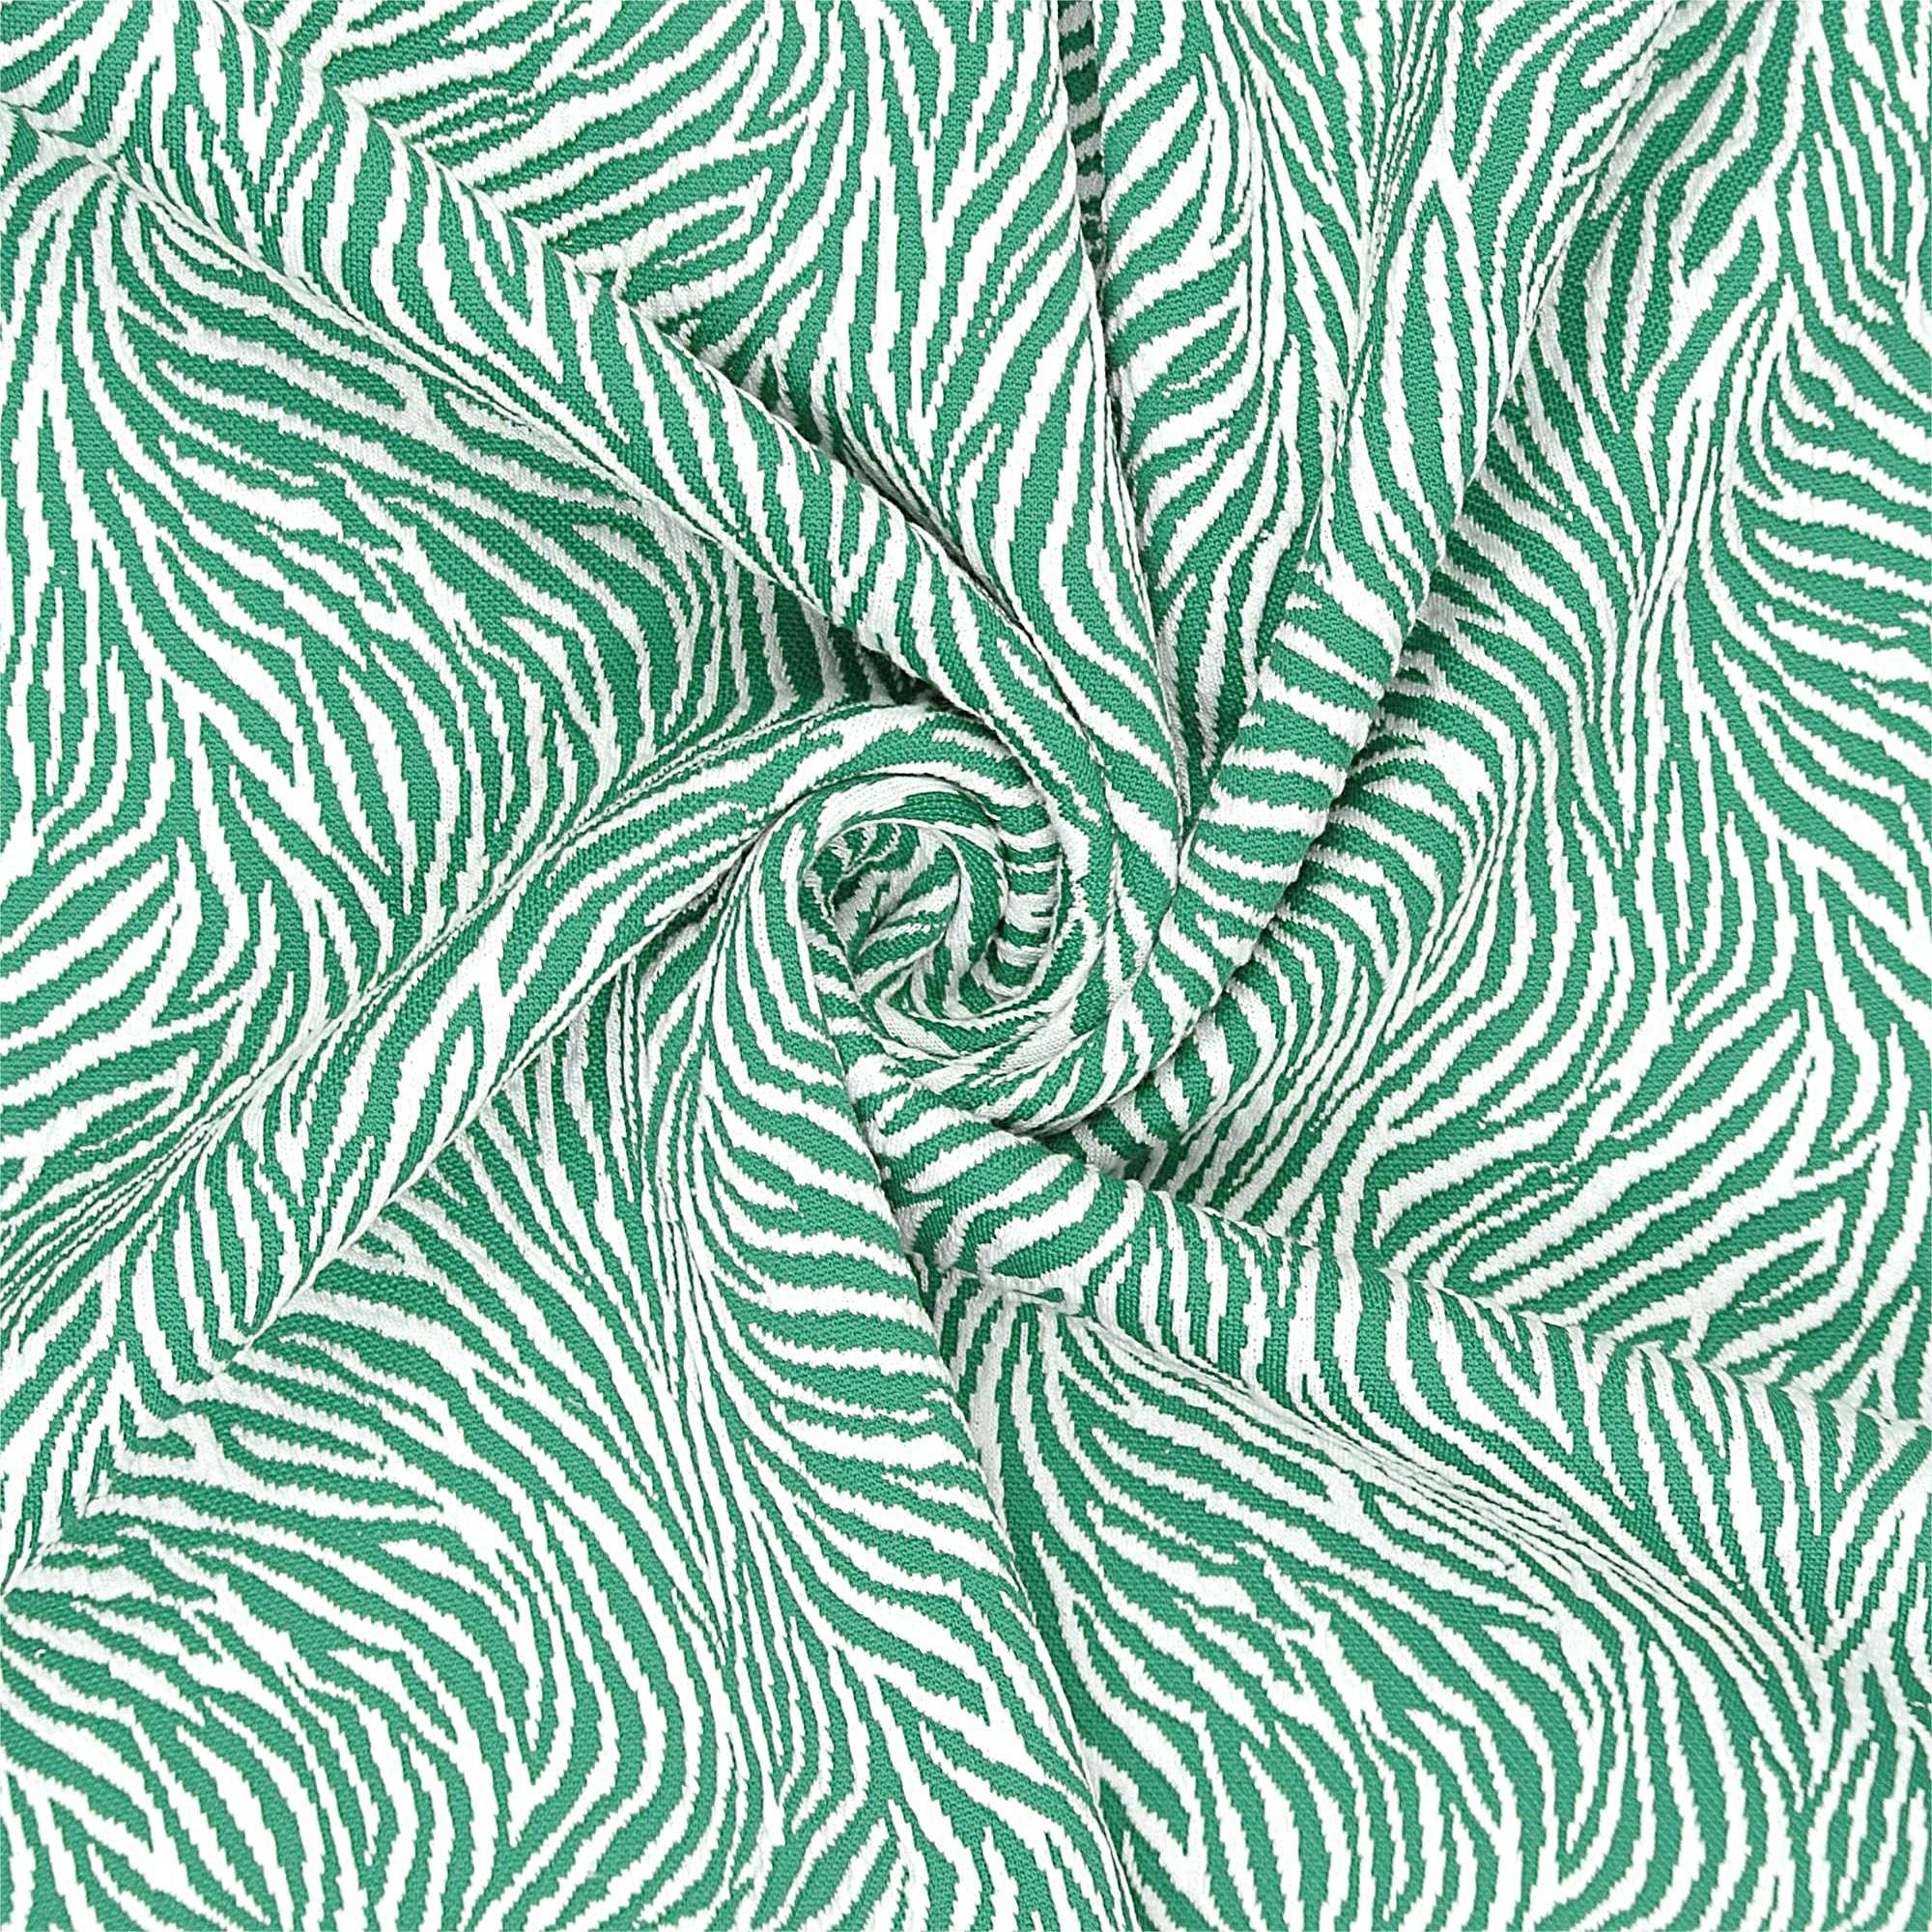 Zebra-stripe Foaming Jacquard Knitting Fabric